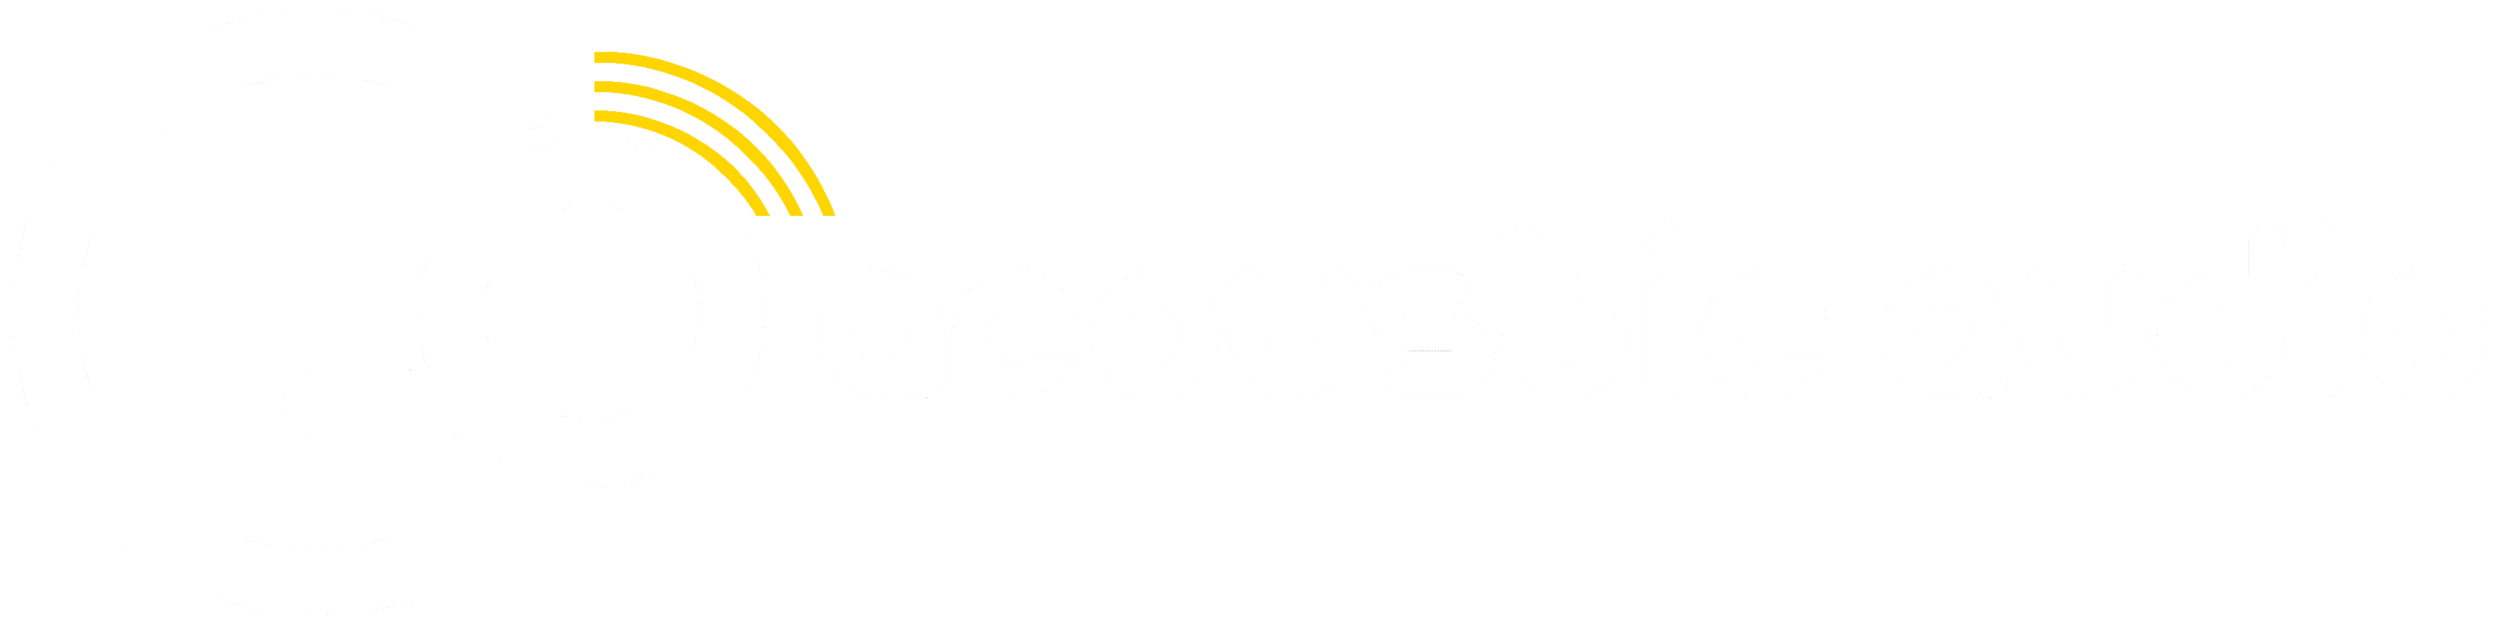 Go Acoustic Audio